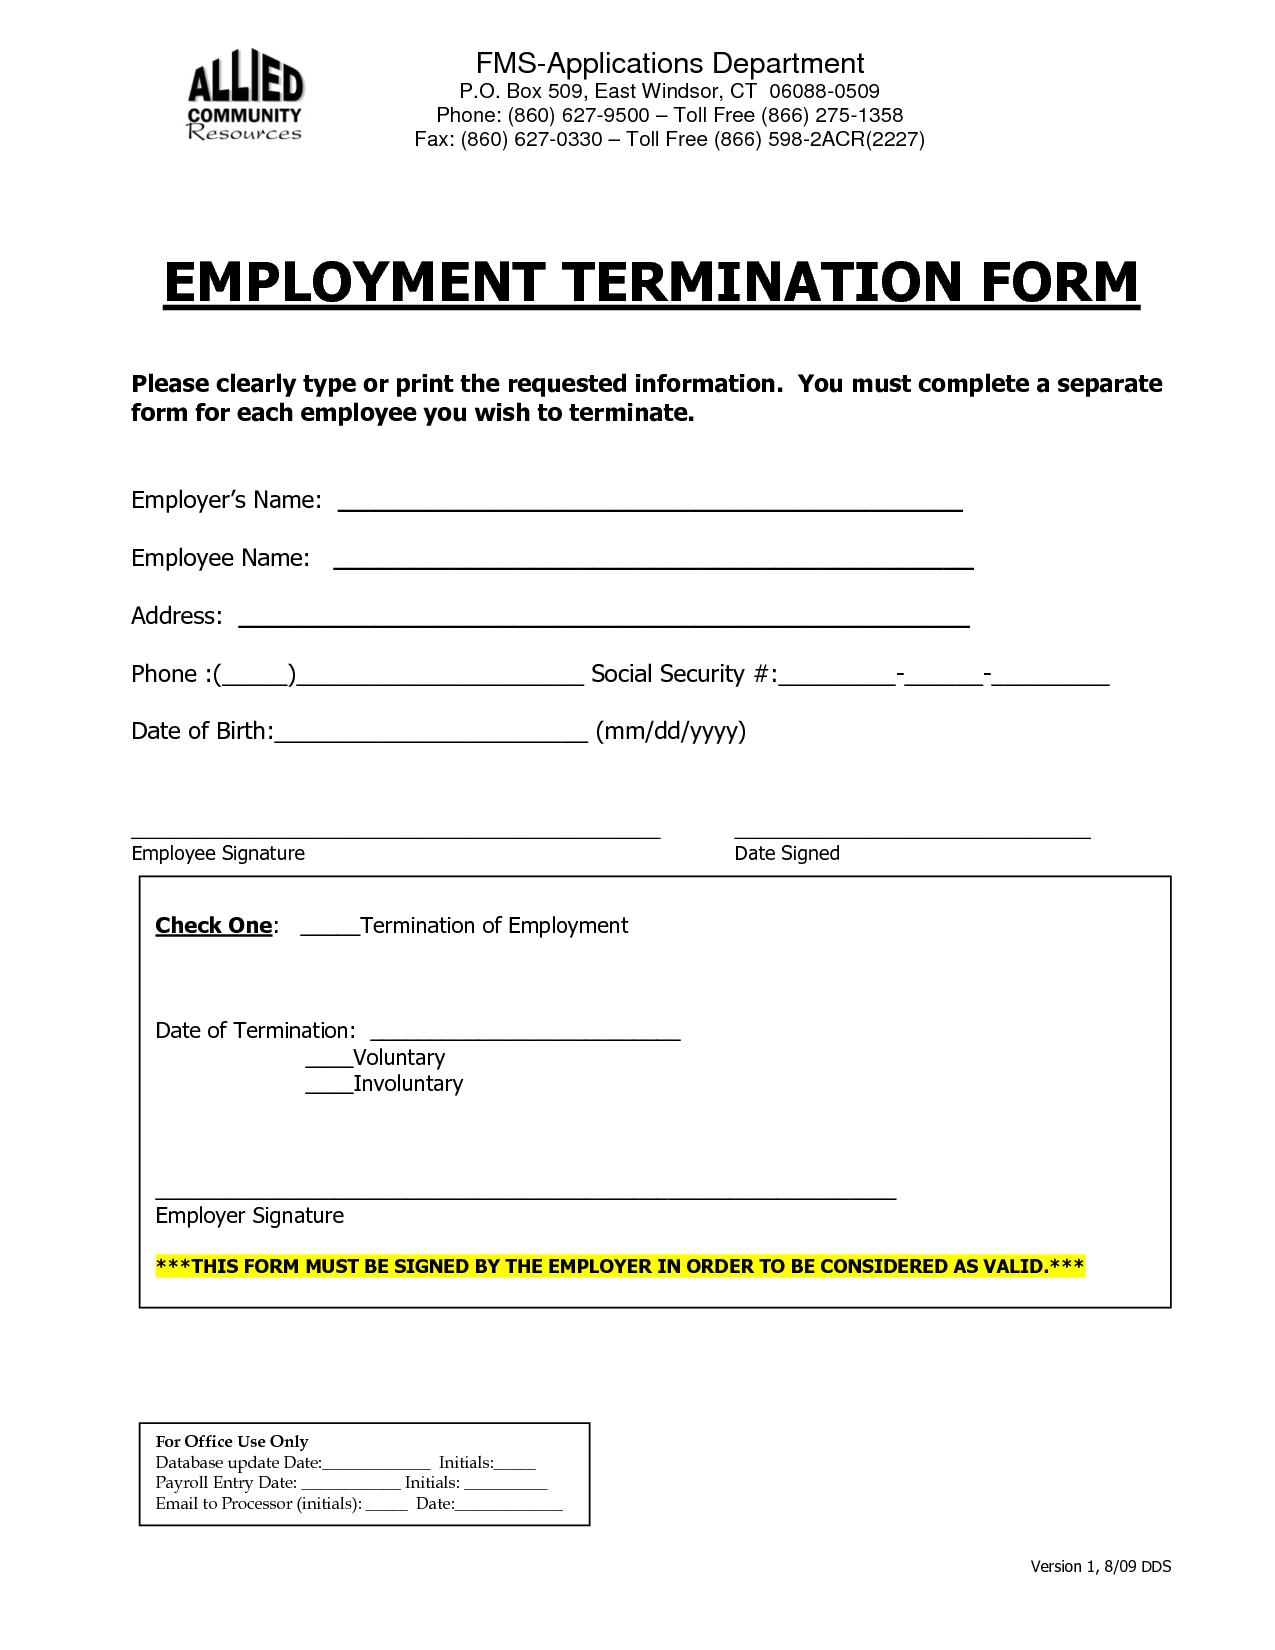 Employee Termination Form - Free Printable Documents